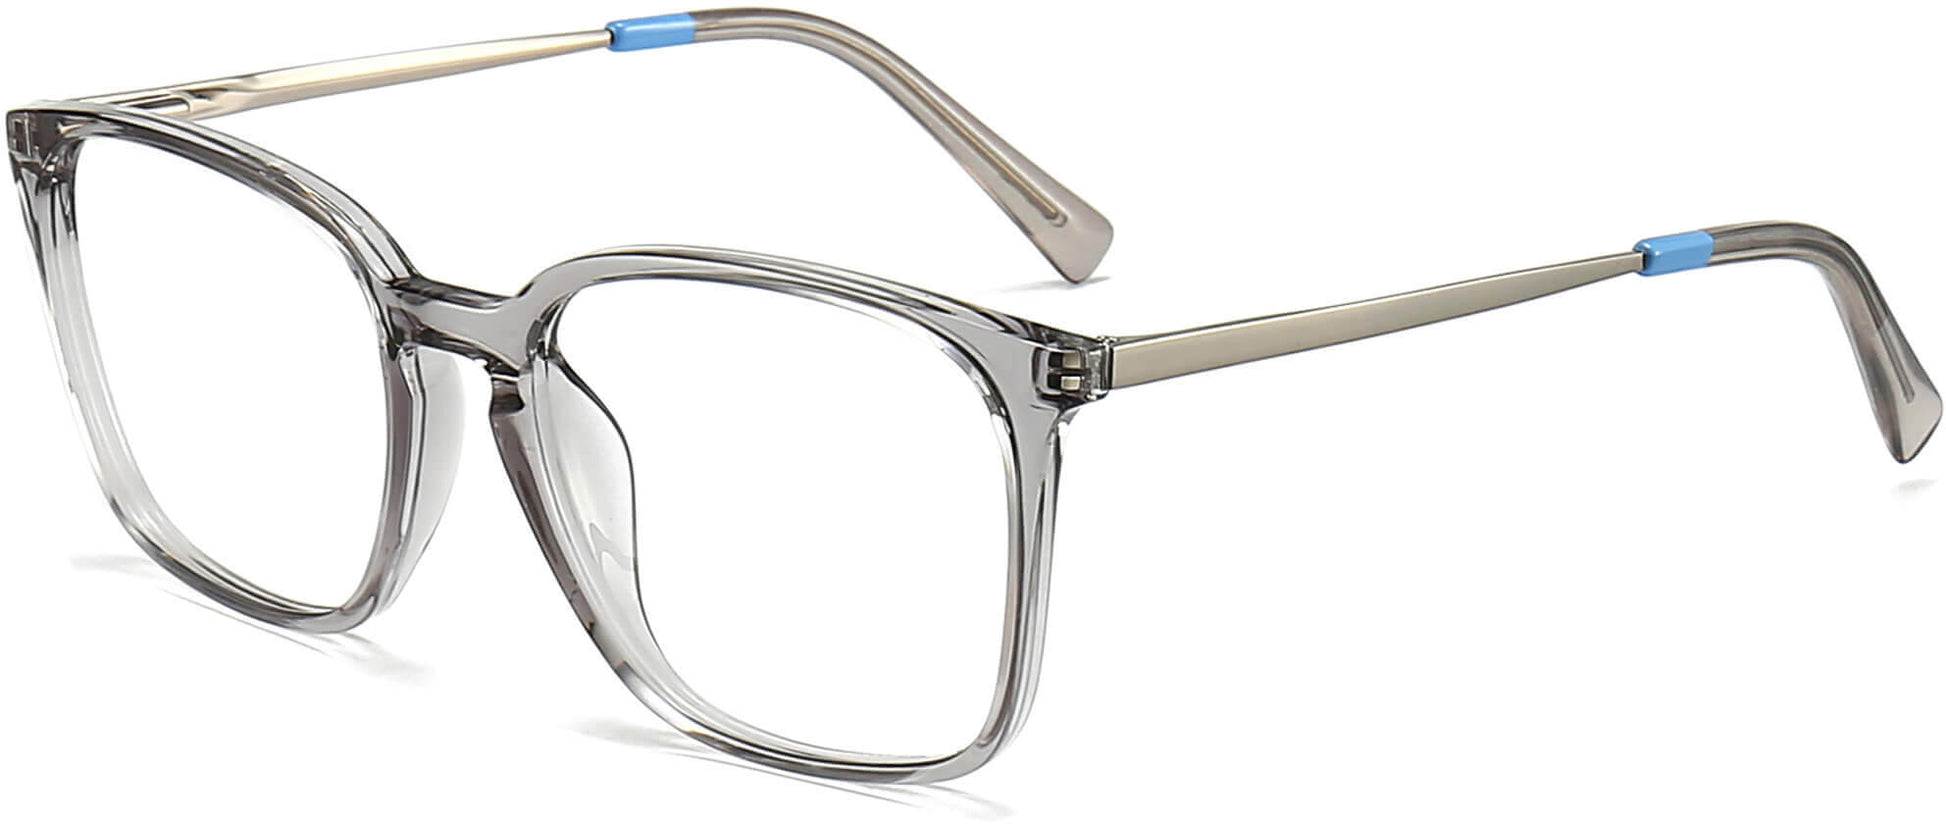 Kieran Square Gray Eyeglasses from ANRRI, angle view